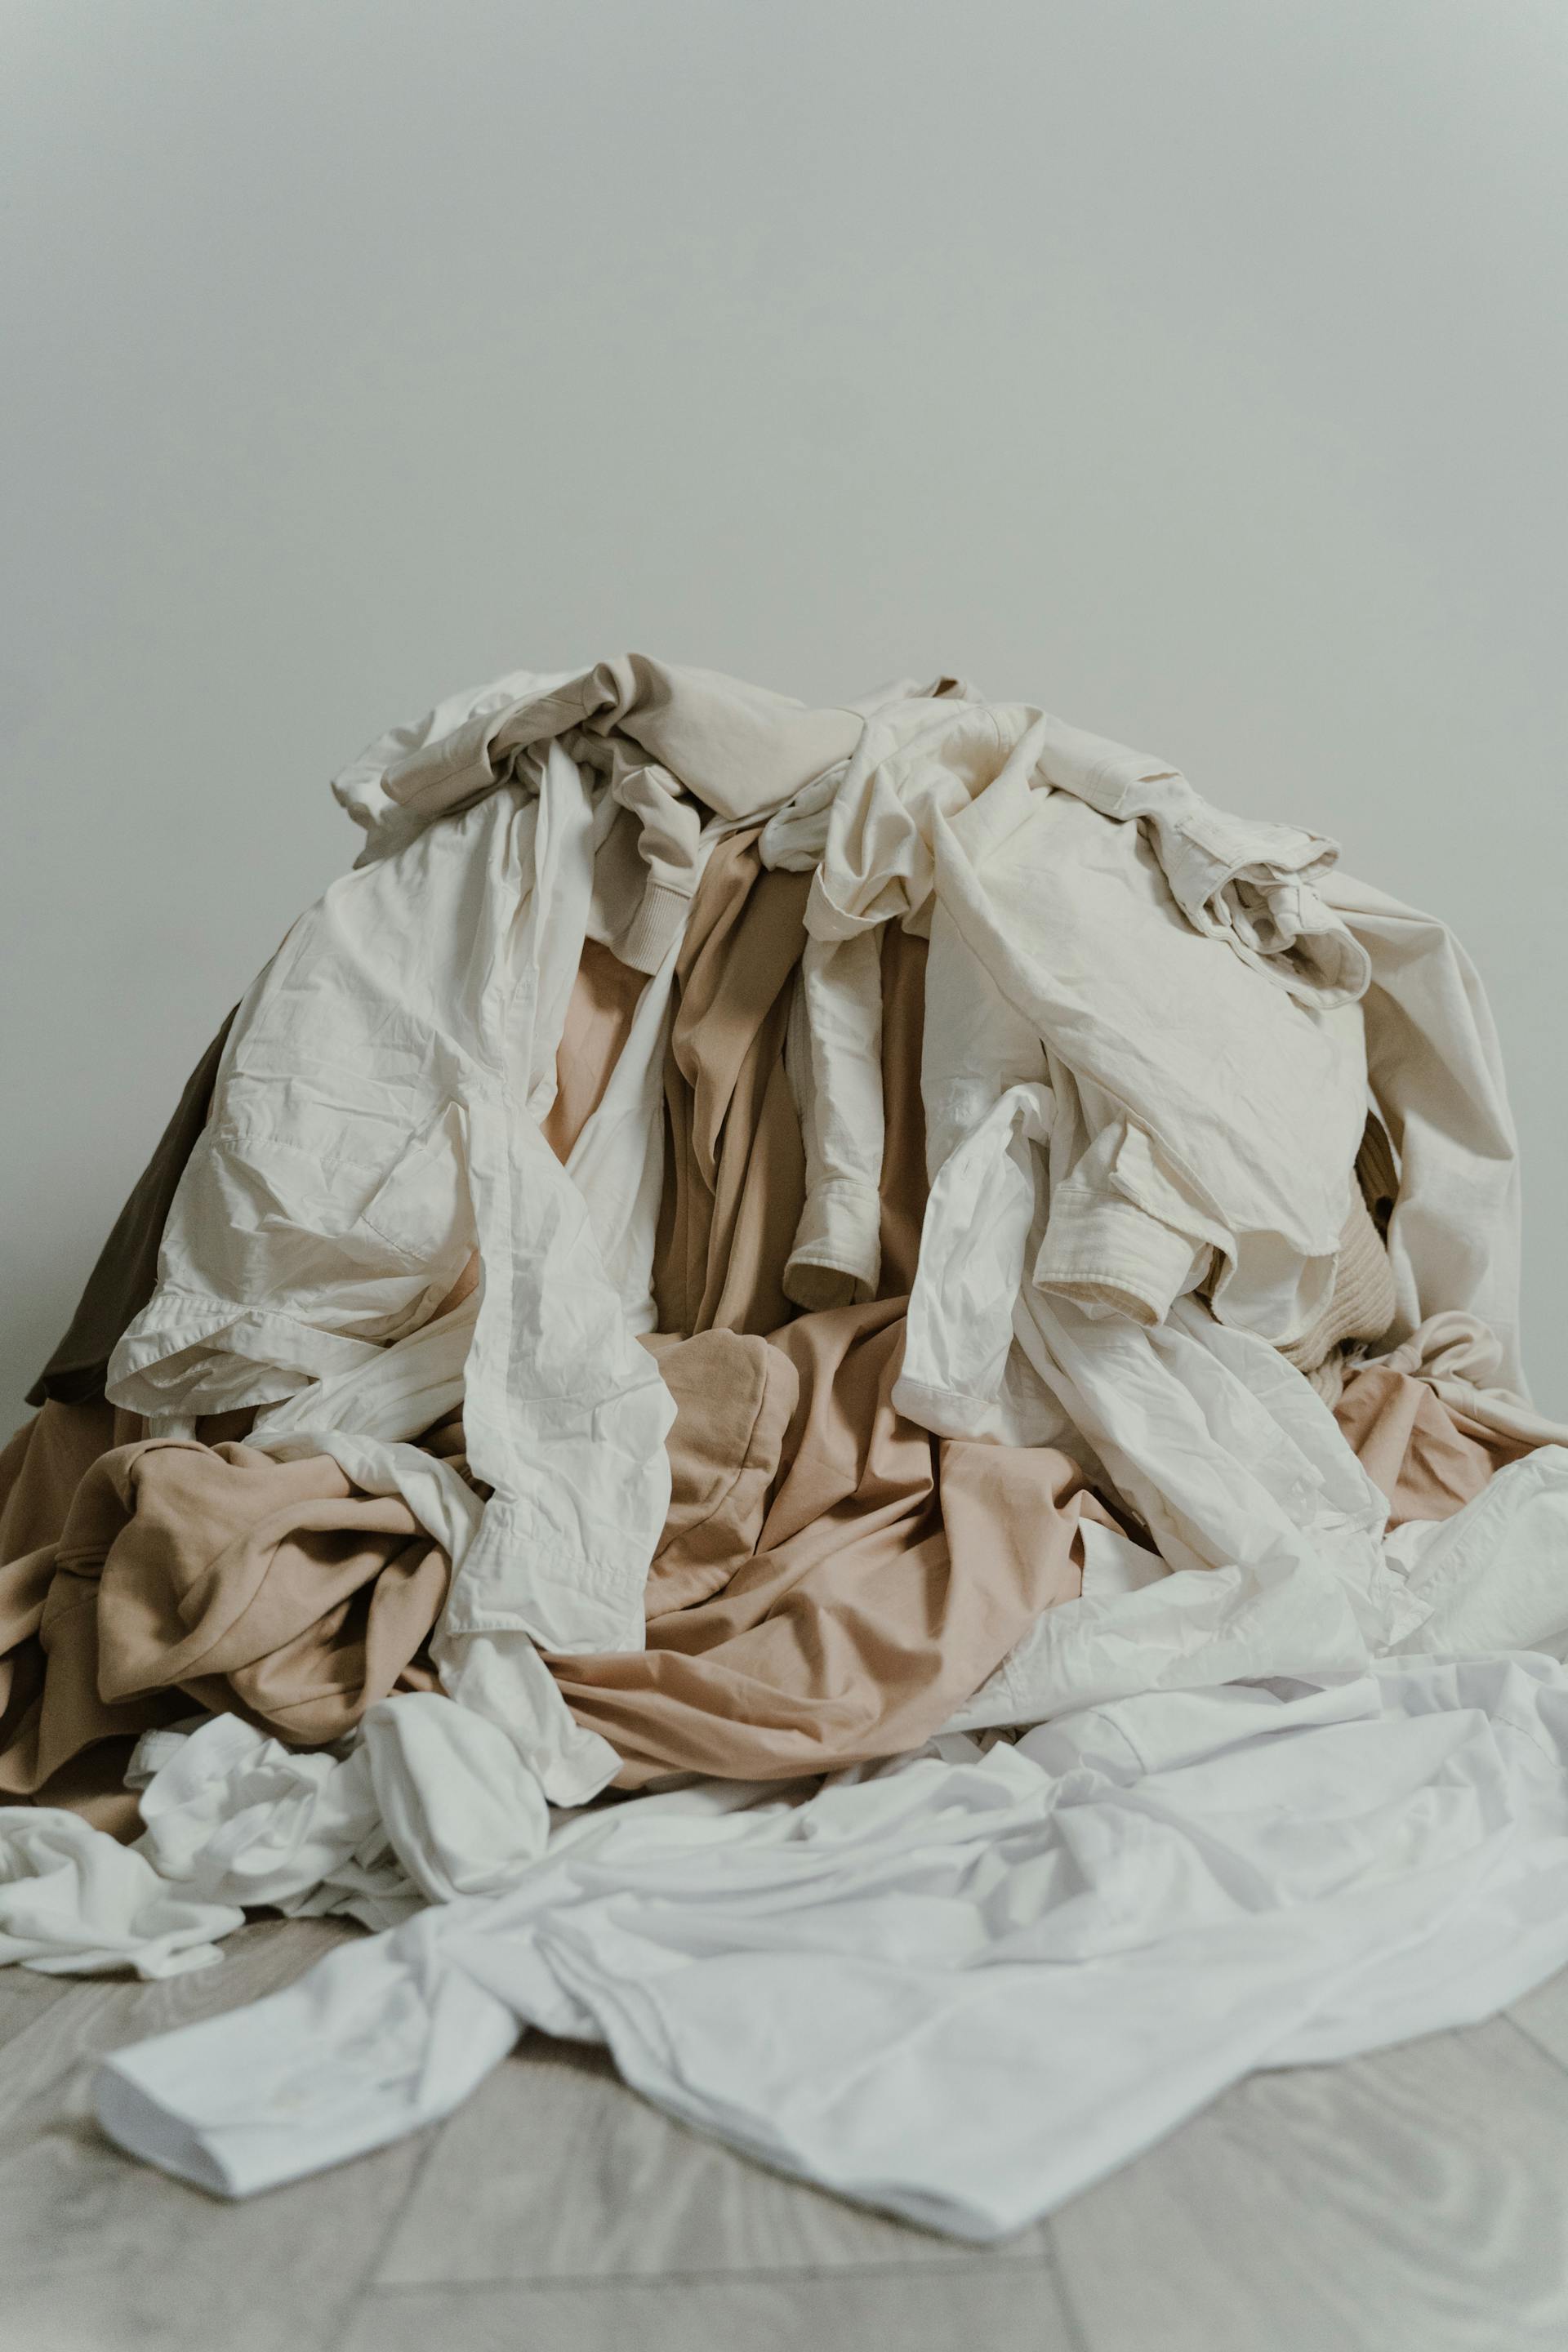 A pile of clothes | Source: Pexels